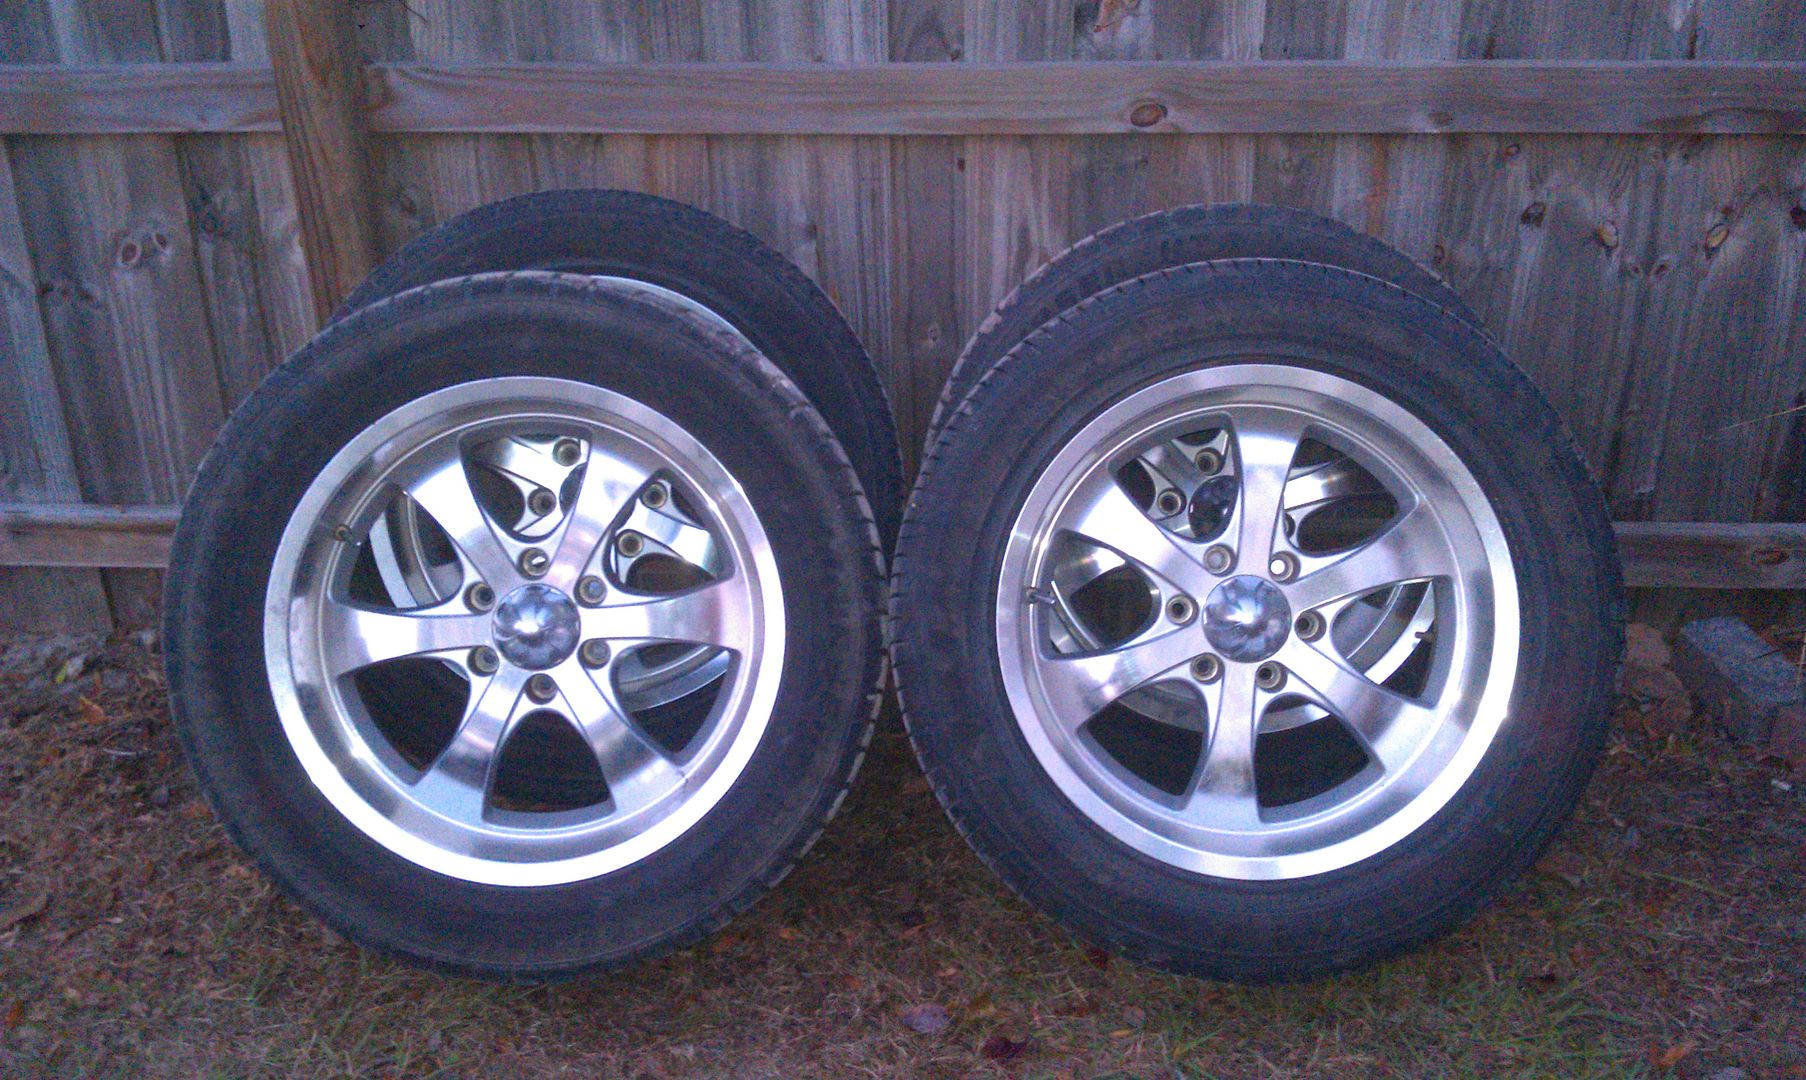 20" Enkei Tundra XSP wheels & tires - North Florida - $700 | Tacoma World 2006 Toyota Tundra Xsp Wheels For Sale